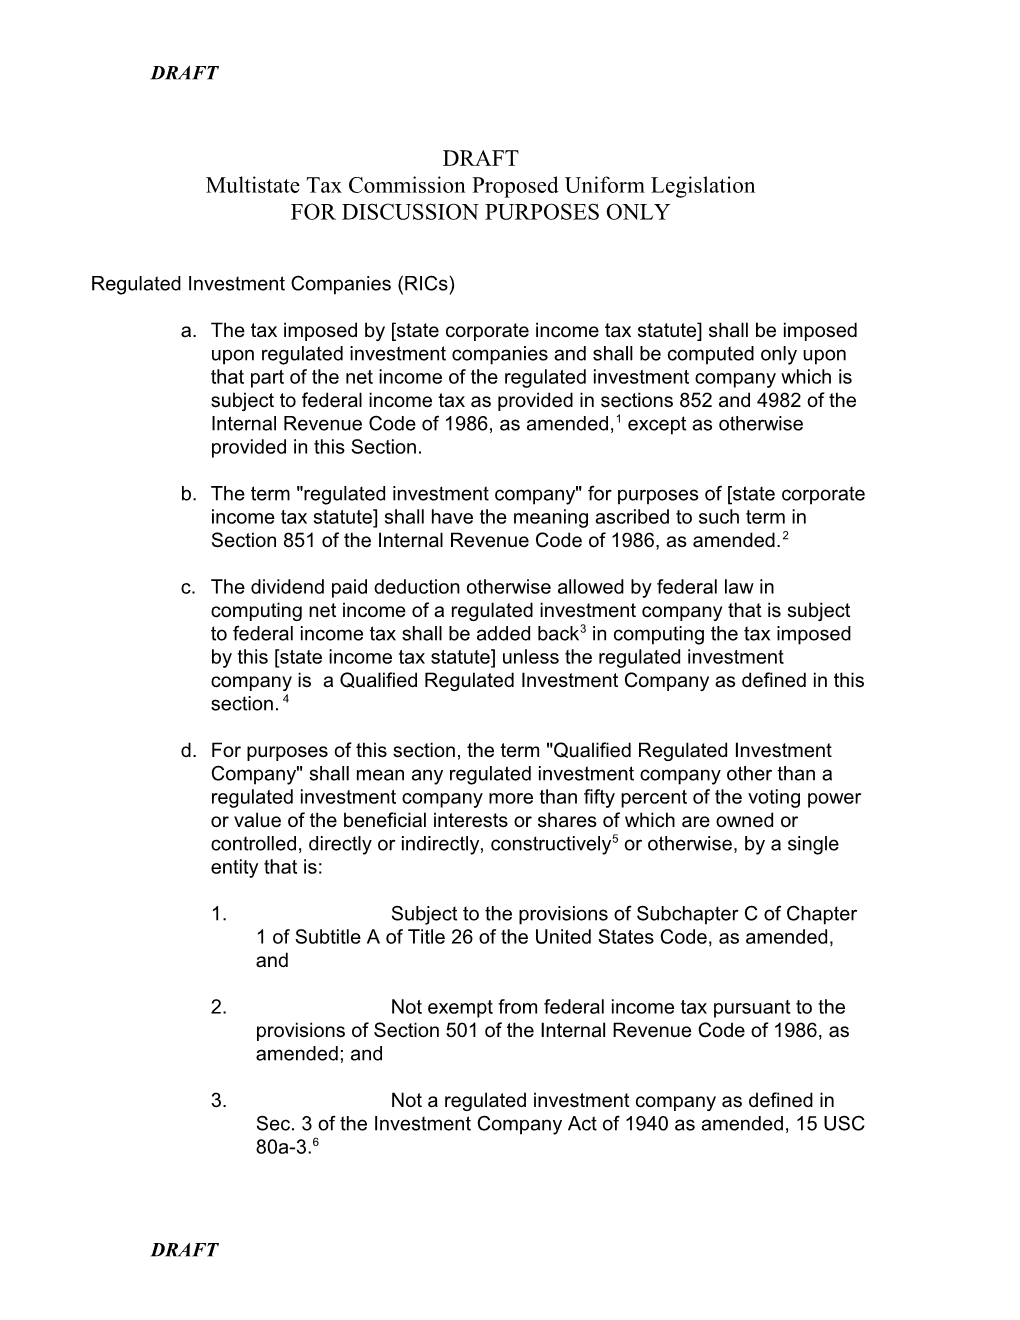 Multistate Tax Commission Proposed Uniform Legislation